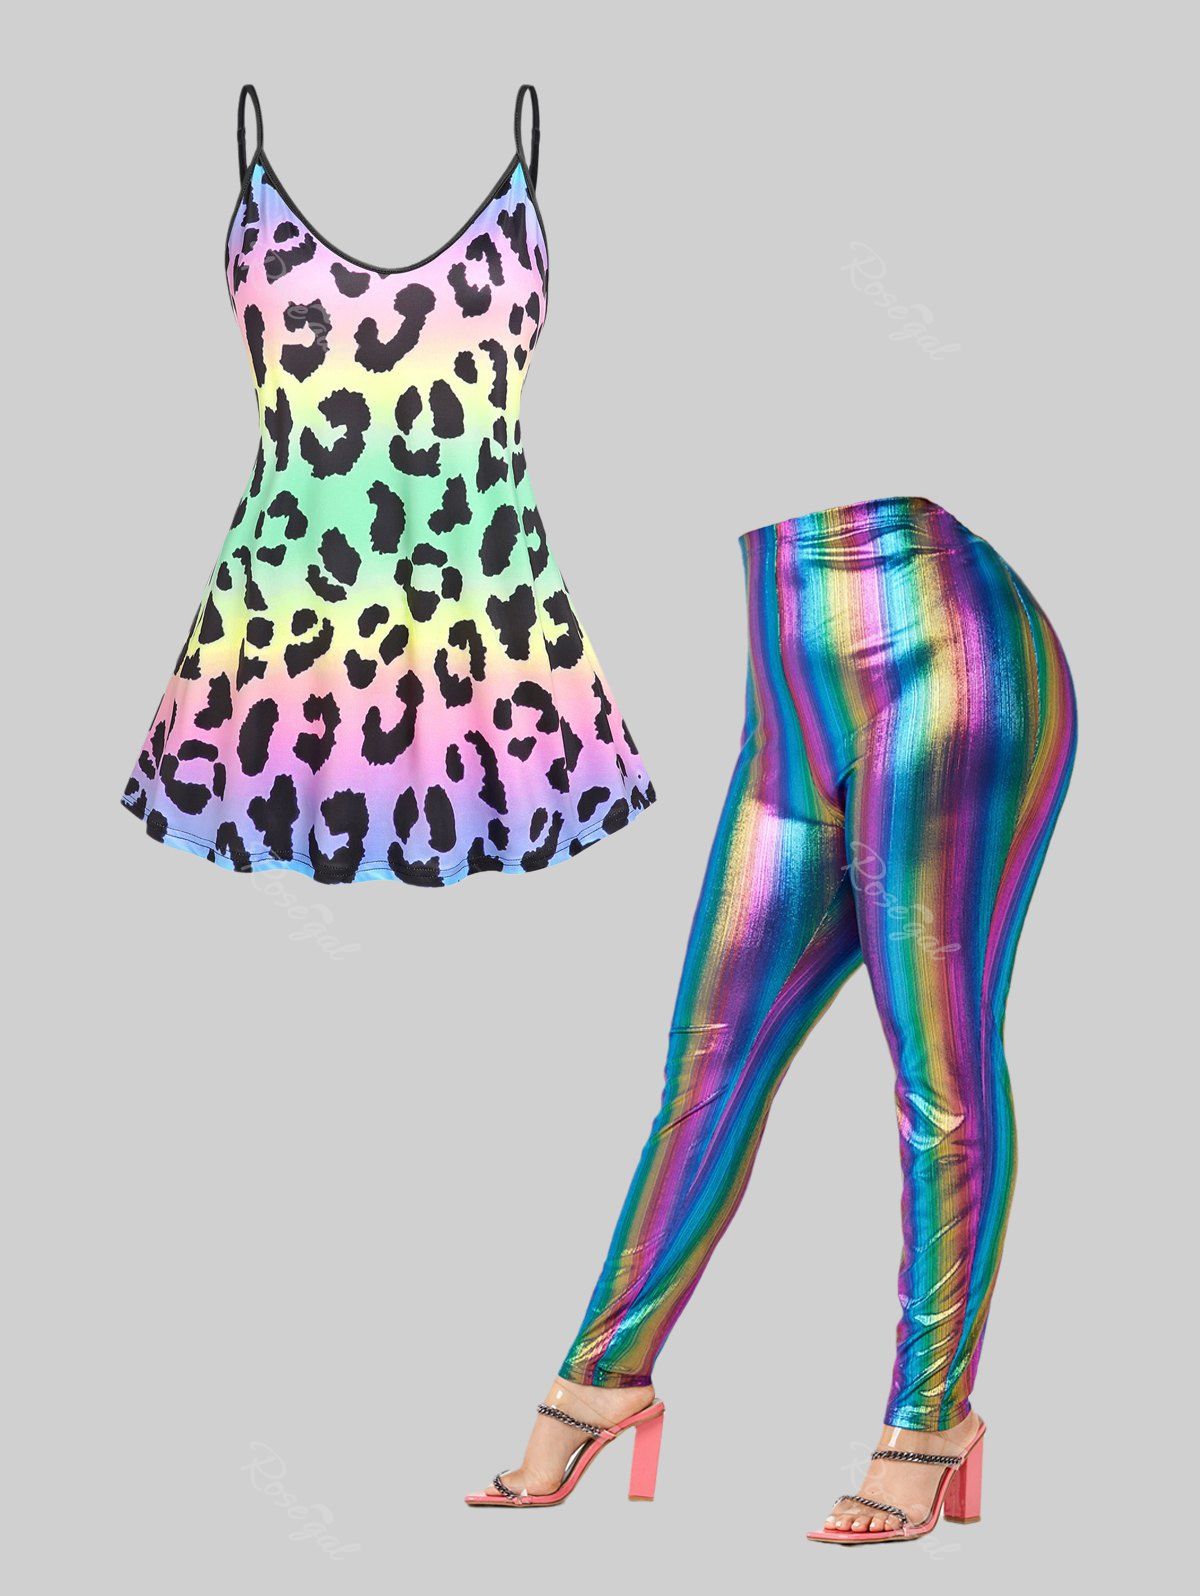 Shops Leopard Rainbow Print Tank Top and Sparkle Metallic Party Pants Plus Size Festival Outfit  